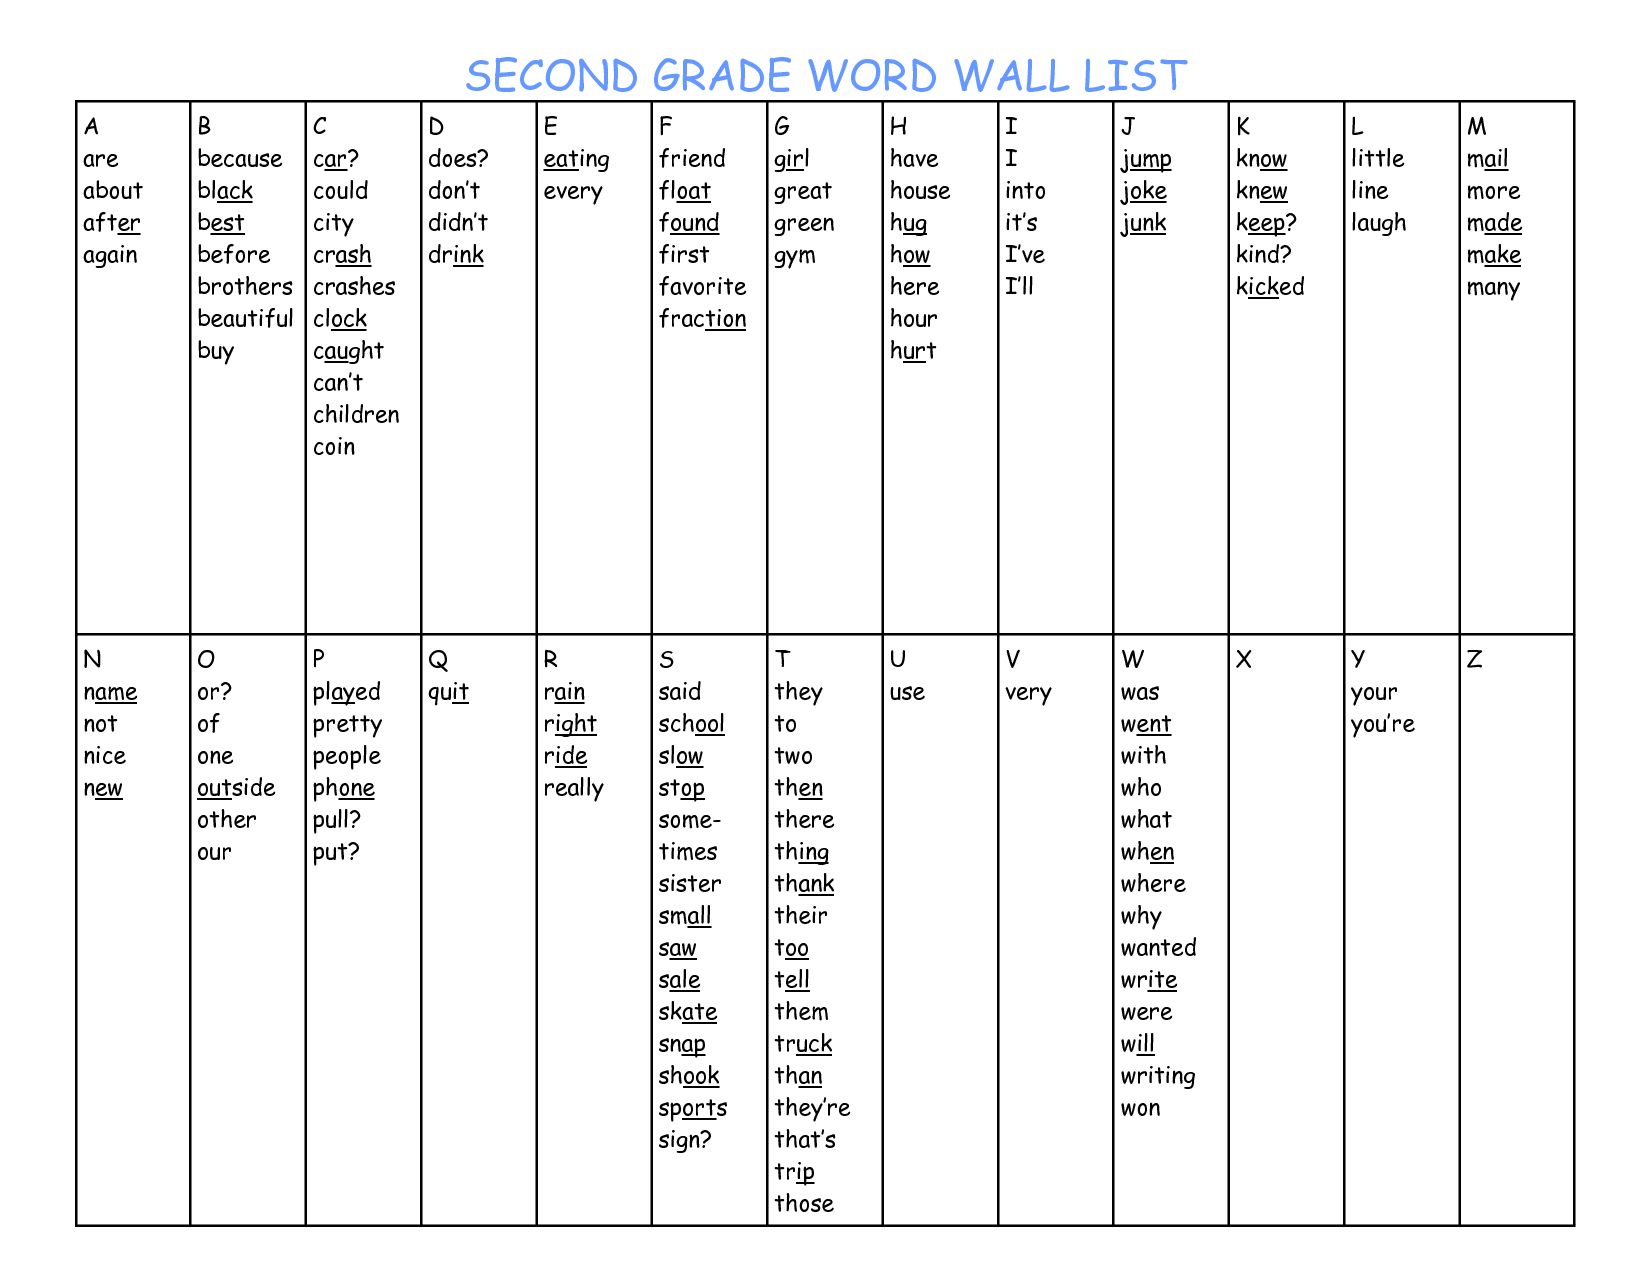 Second Grade Word Wall List